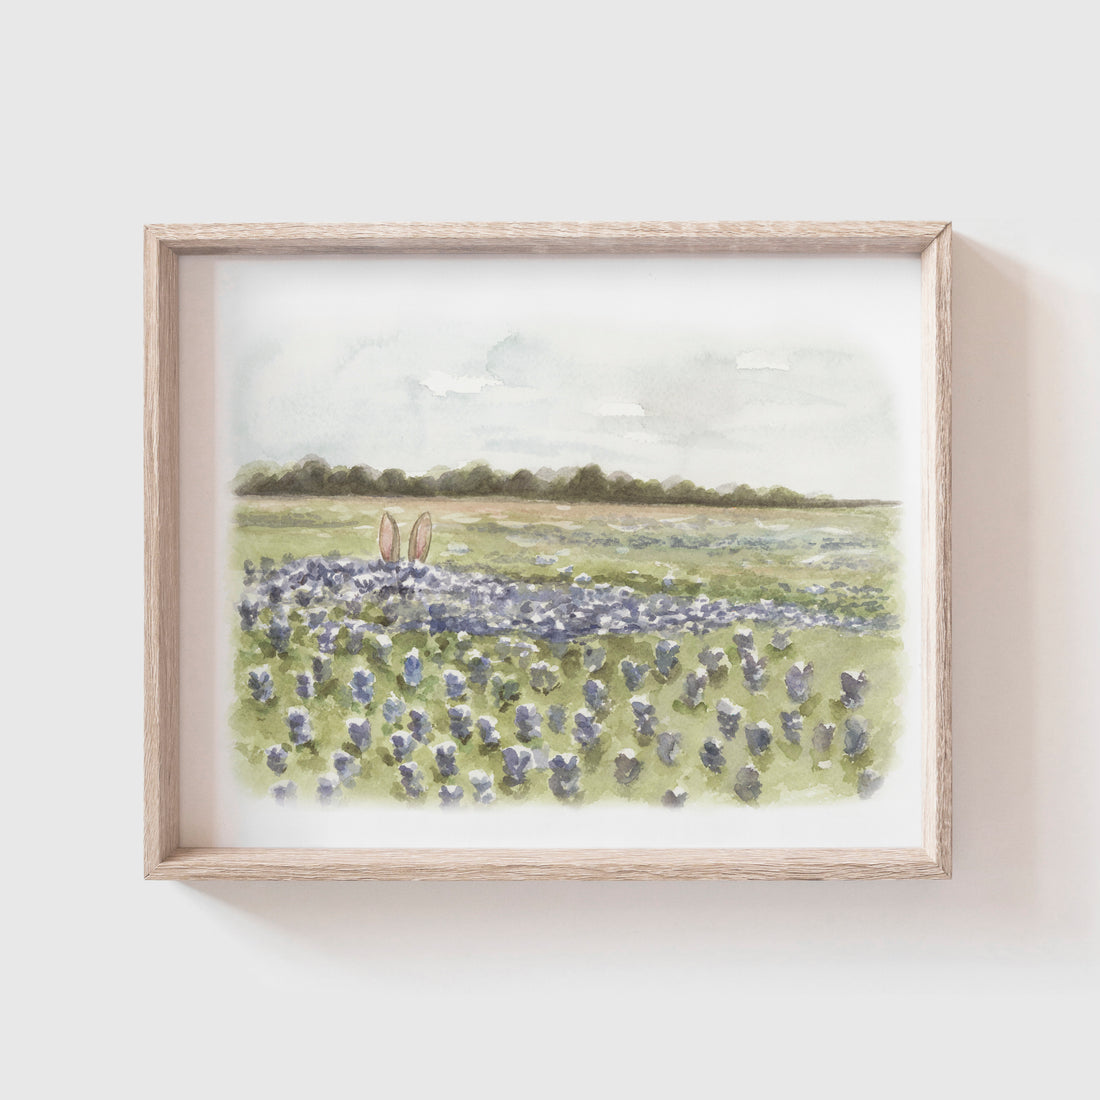 'Rabbit in a Field of Bluebonnets' Art Print (Our Little Adventures)